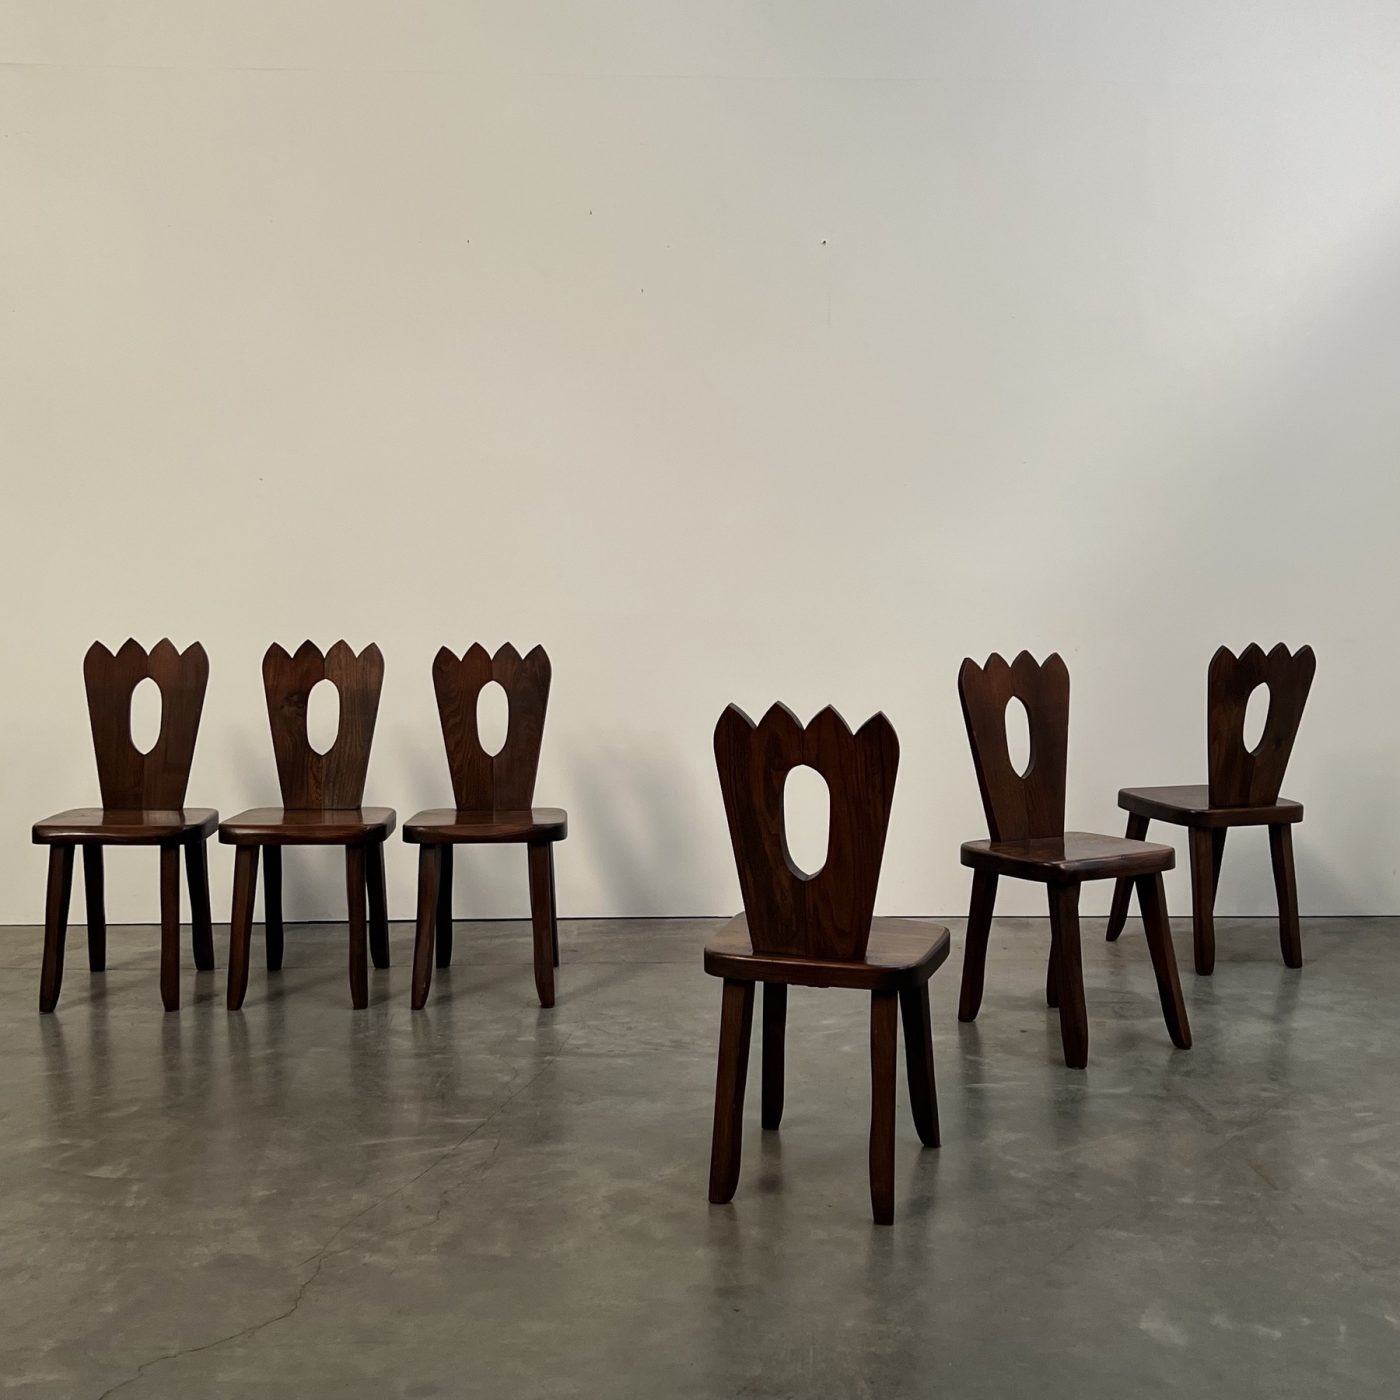 objet-vagabond-brutalist-chairs0005